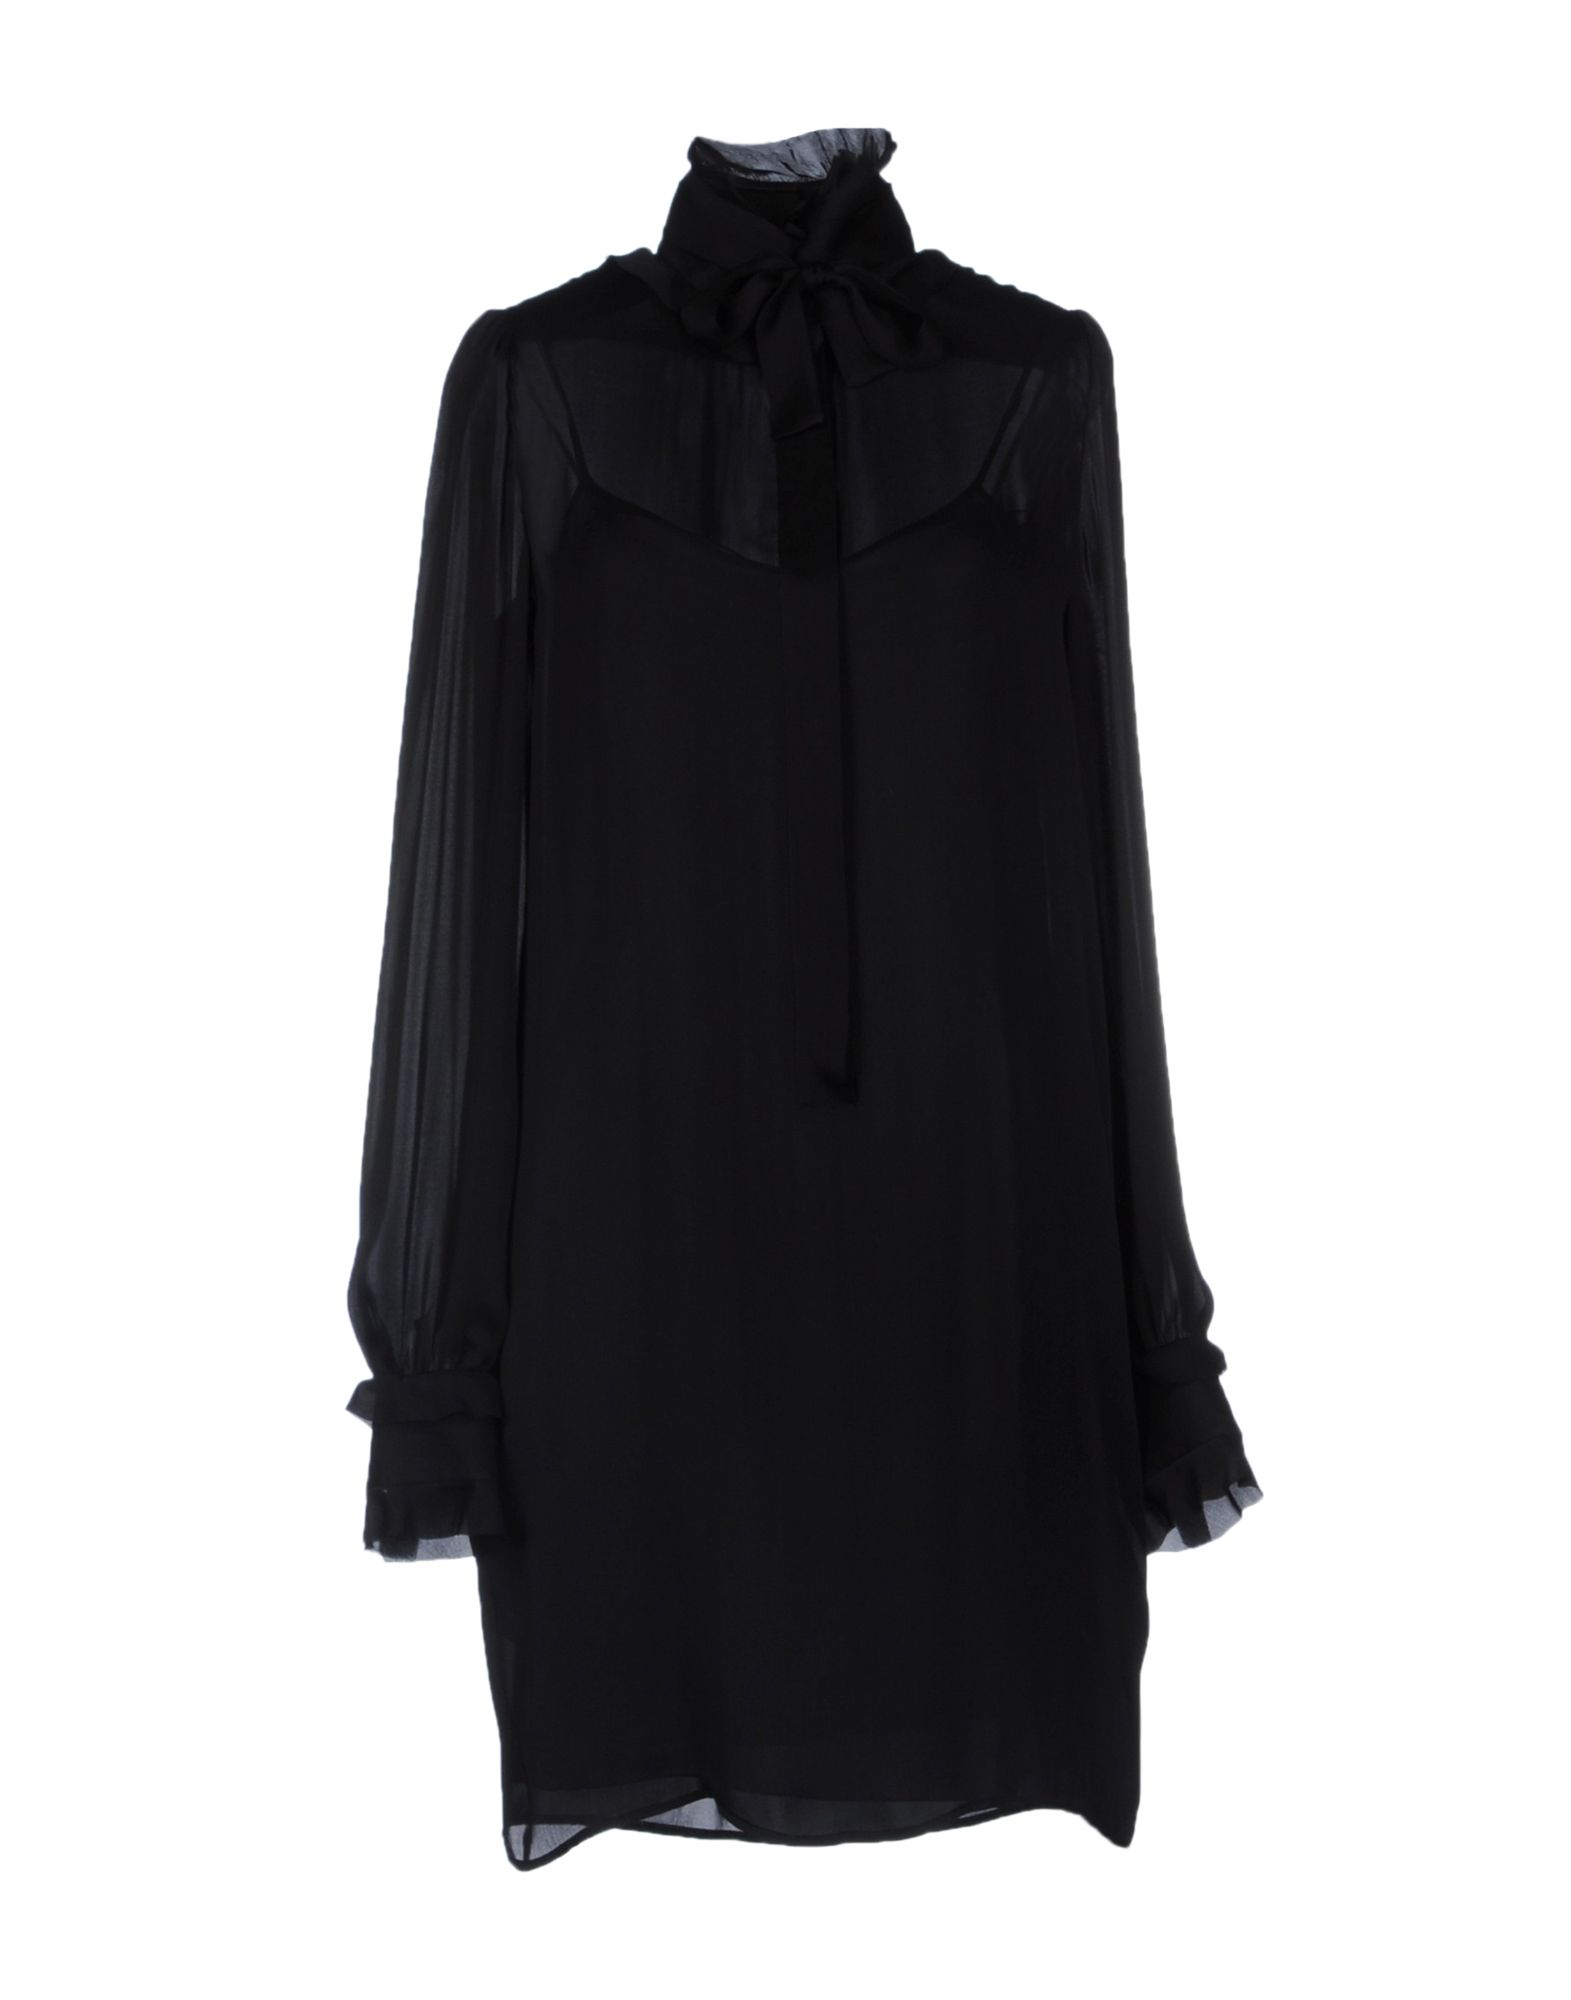 Emilio pucci Short Dress in Black | Lyst